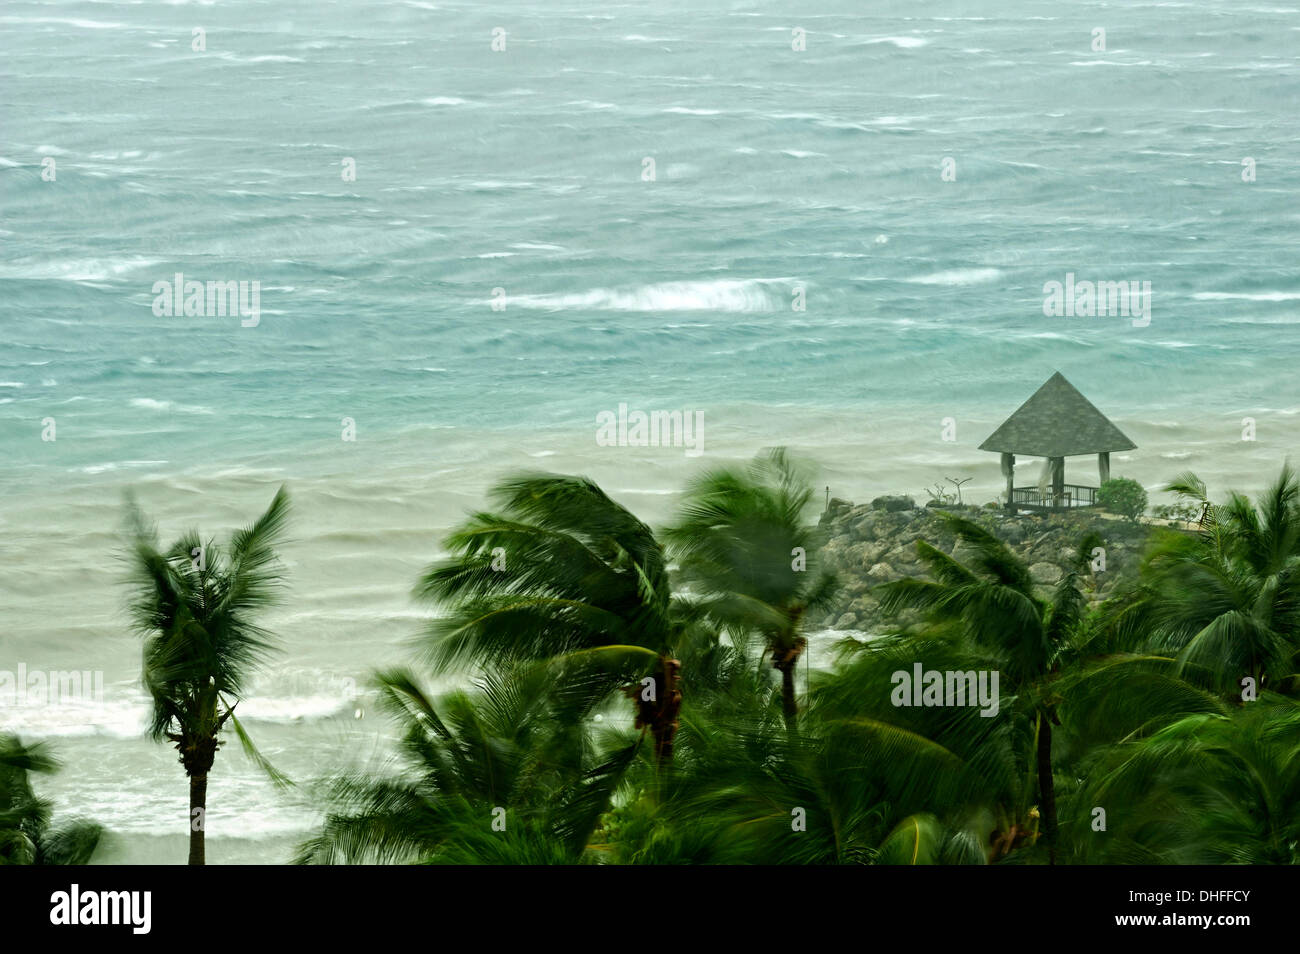 Worlds strongest storm ever recorded, Super Typhoon Haiyan hits Punta Engaño, Cebu, Lapu-Lapu, Philippines. Stock Photo